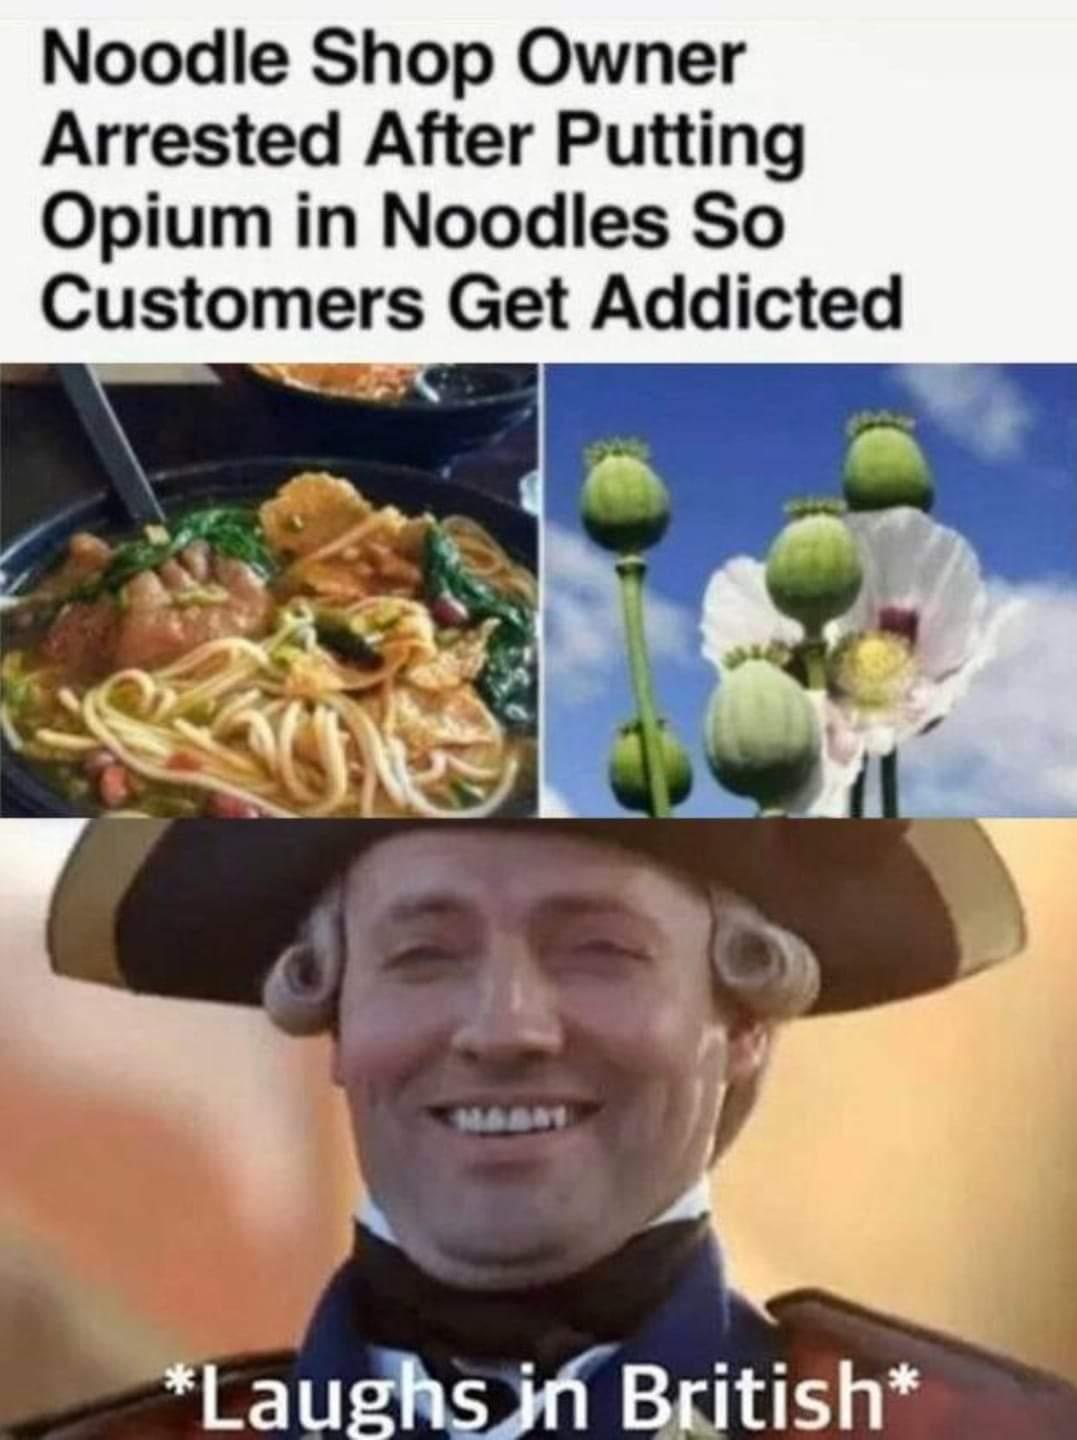 british meme - Noodle Shop Owner Arrested After Putting Opium in Noodles So Customers Get Addicted Laughs in British